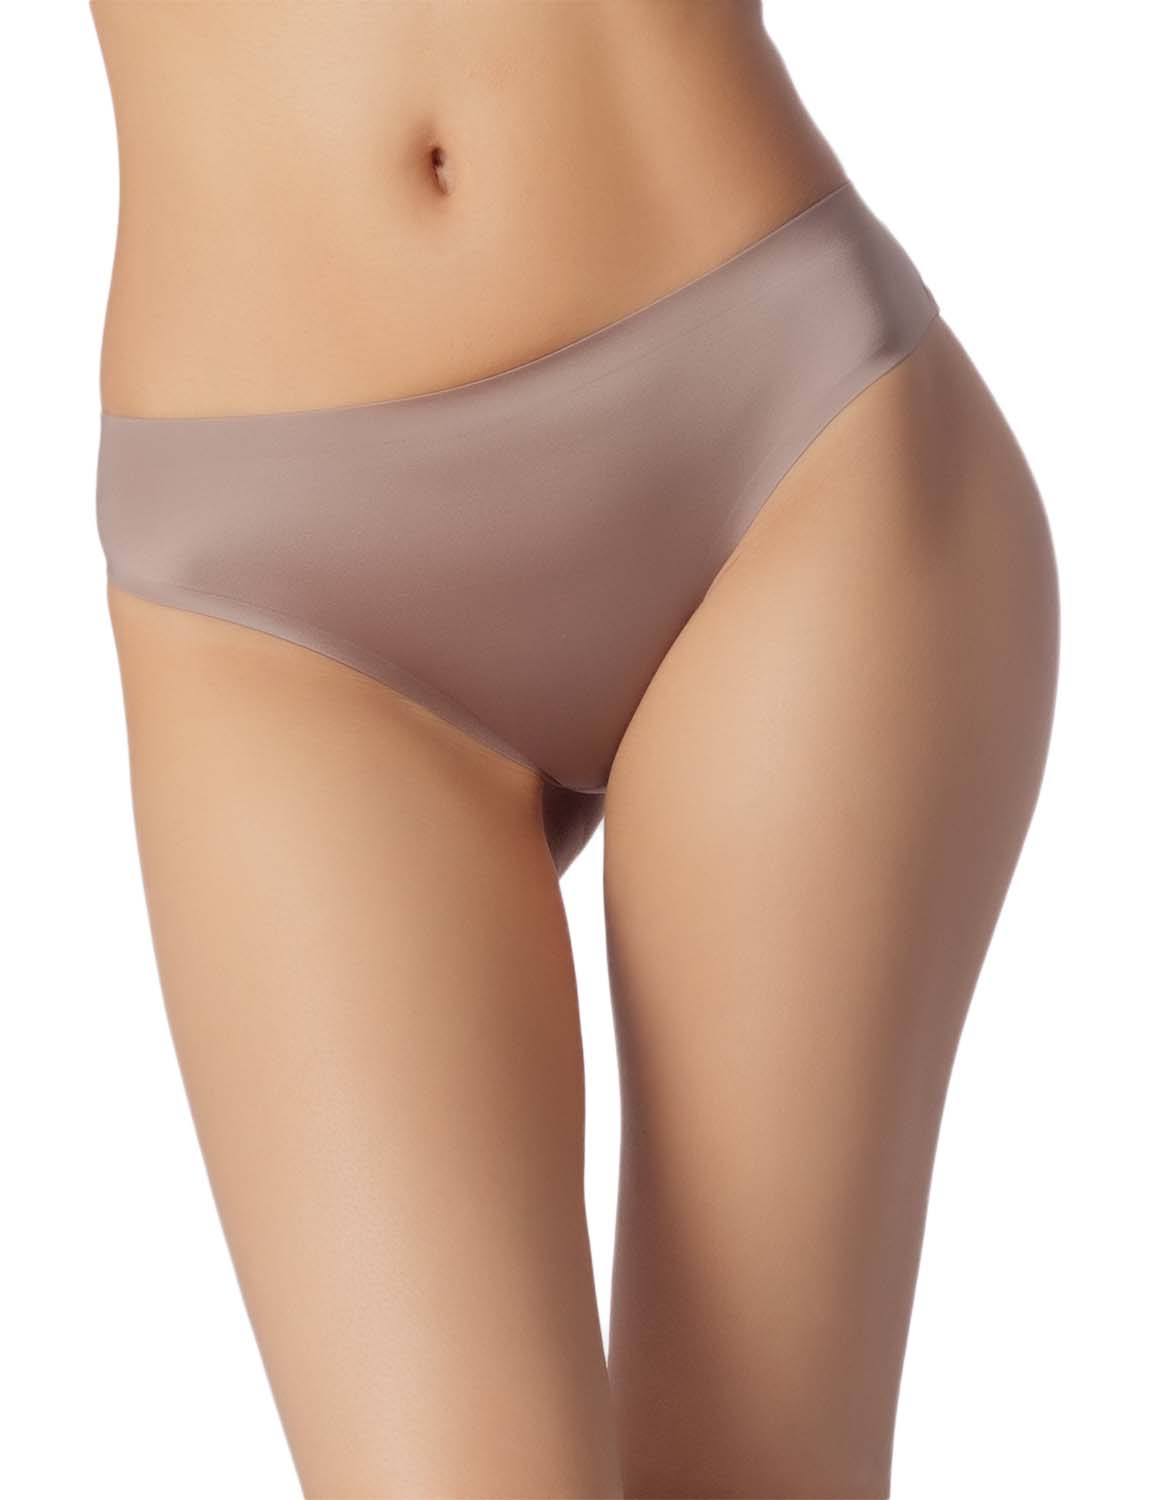 Women's Knickers Silky Nude Breathable Underwear Low Rise Brief Panties